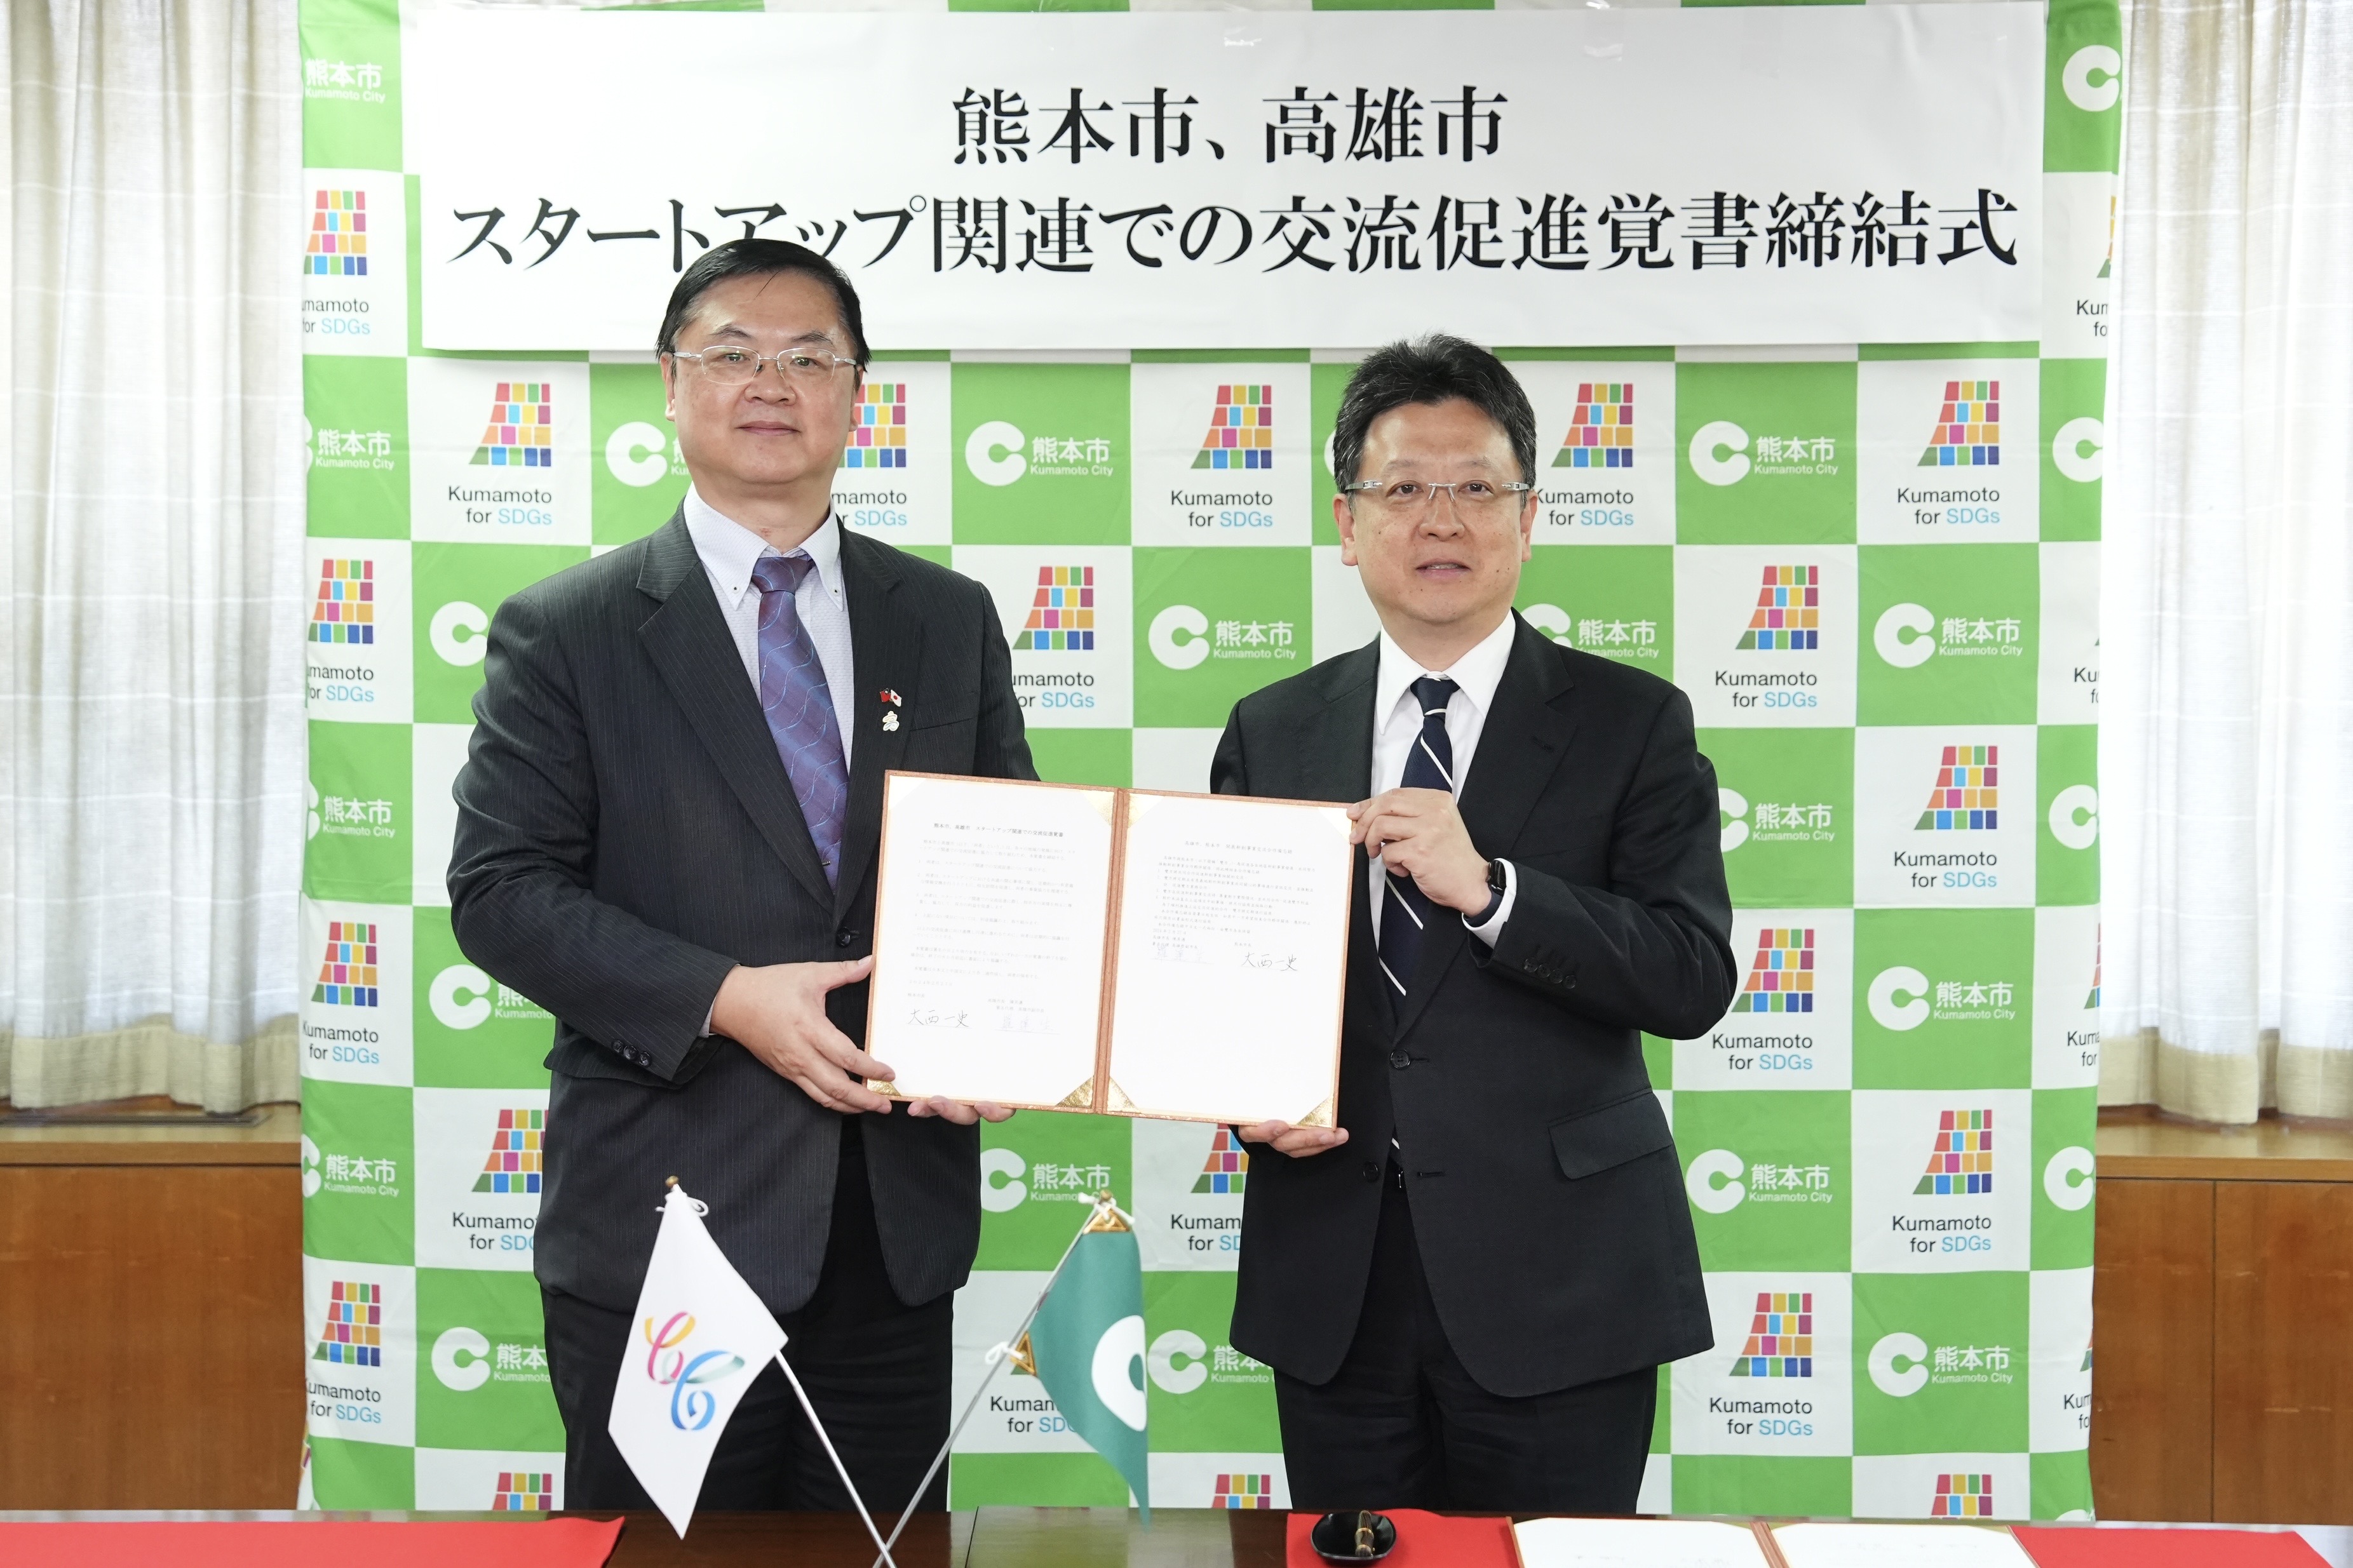 1.Kaohsiung and Kumamoto City signed an MOU